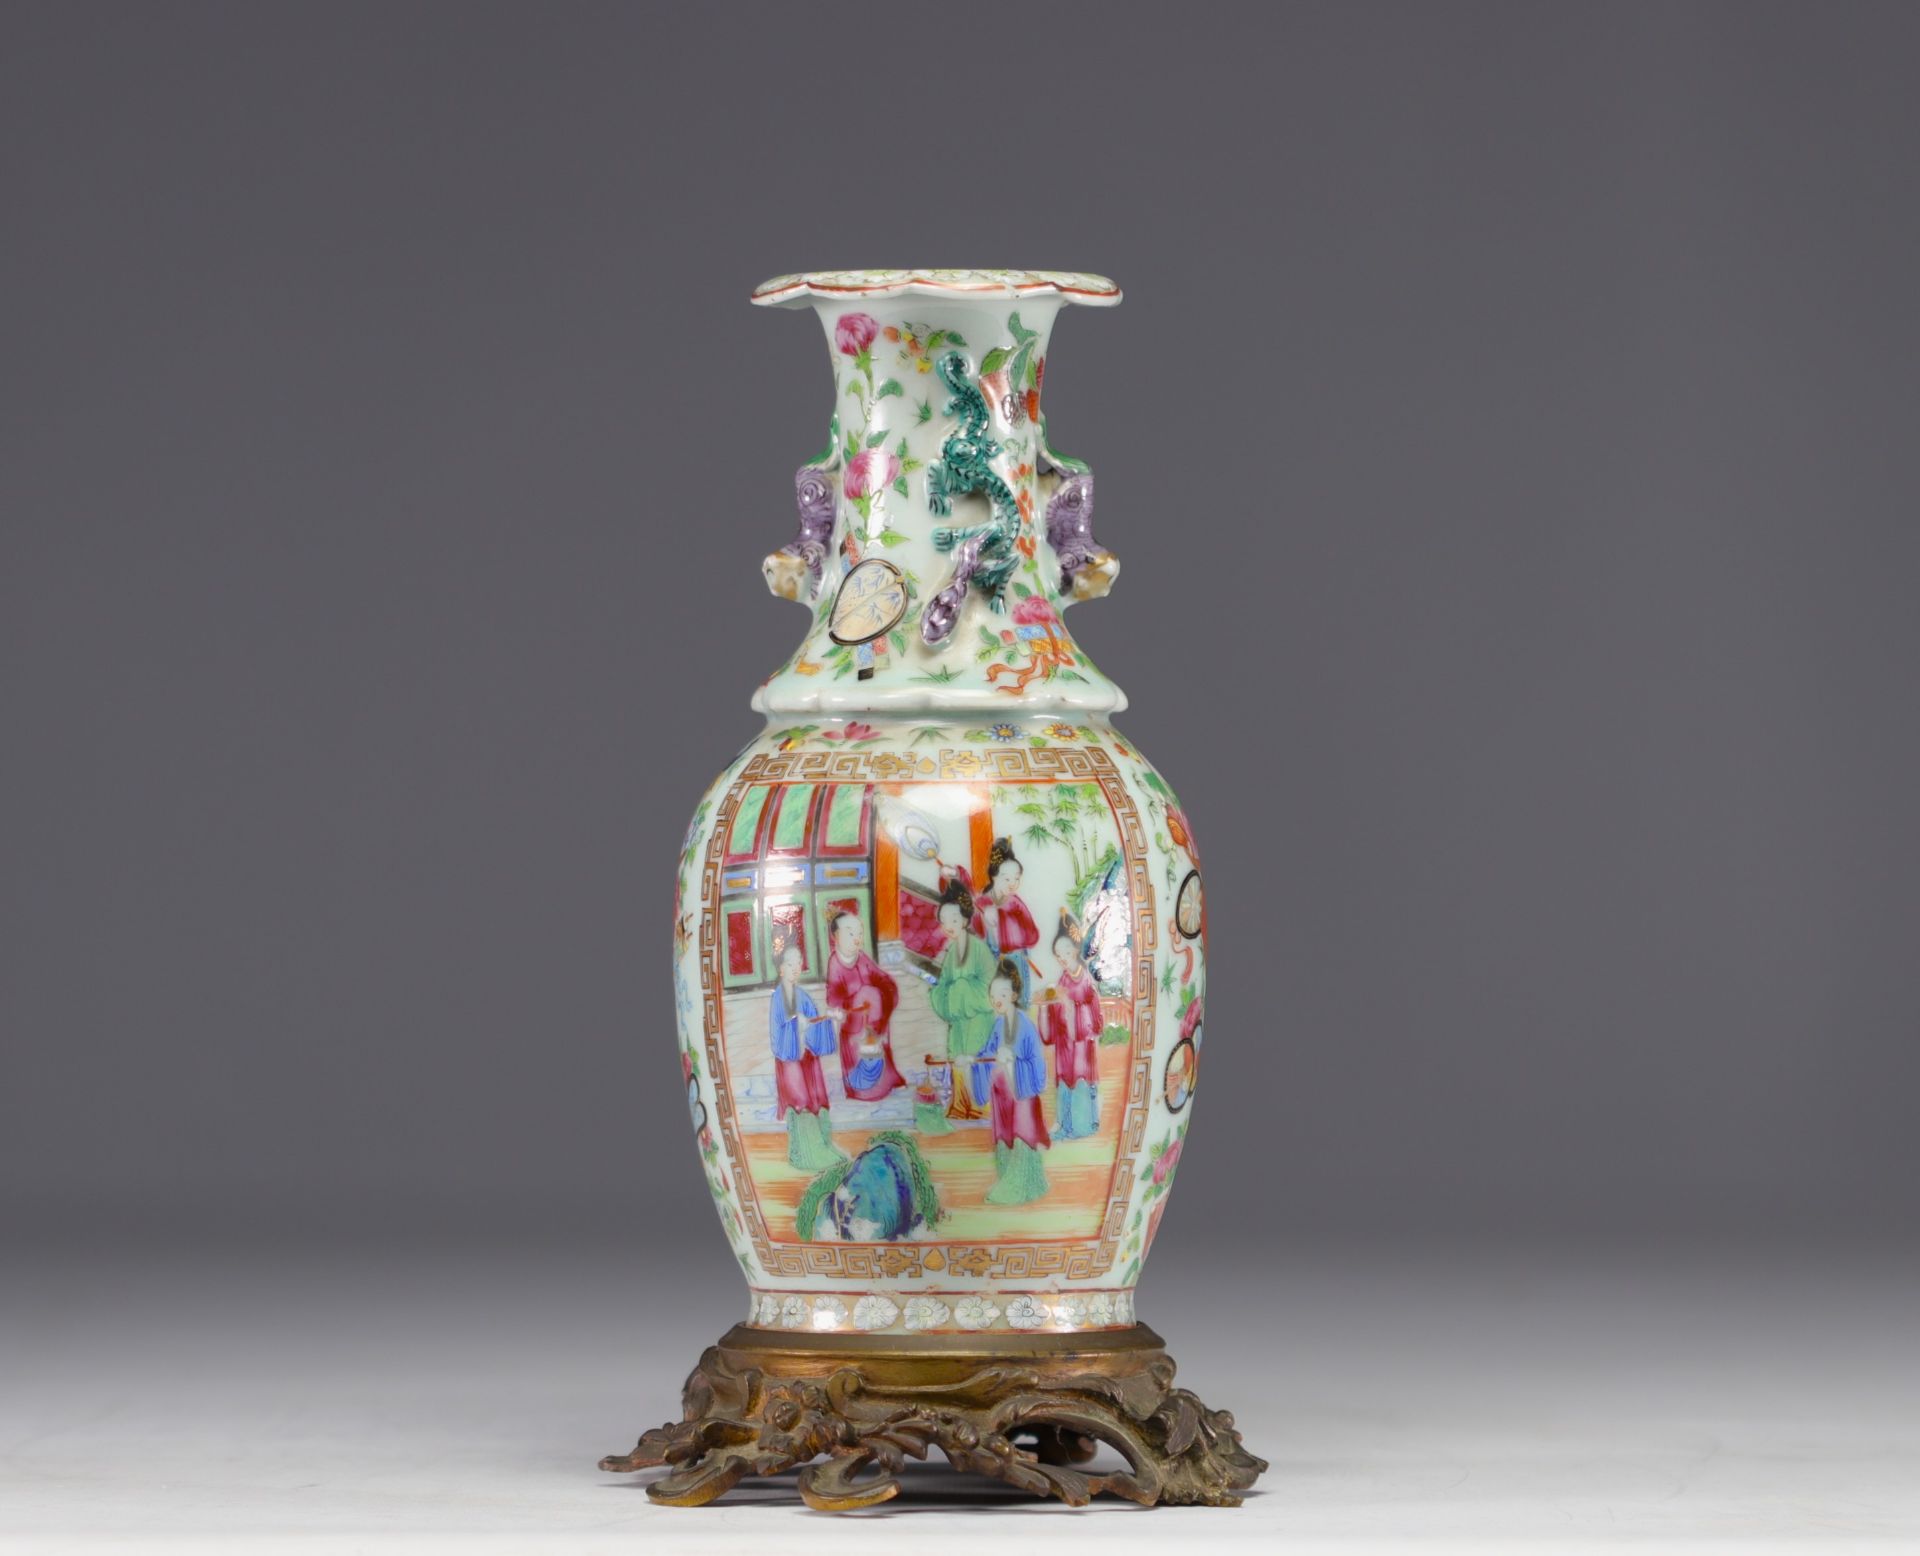 China - Canton porcelain vase mounted on bronze, 19th century.